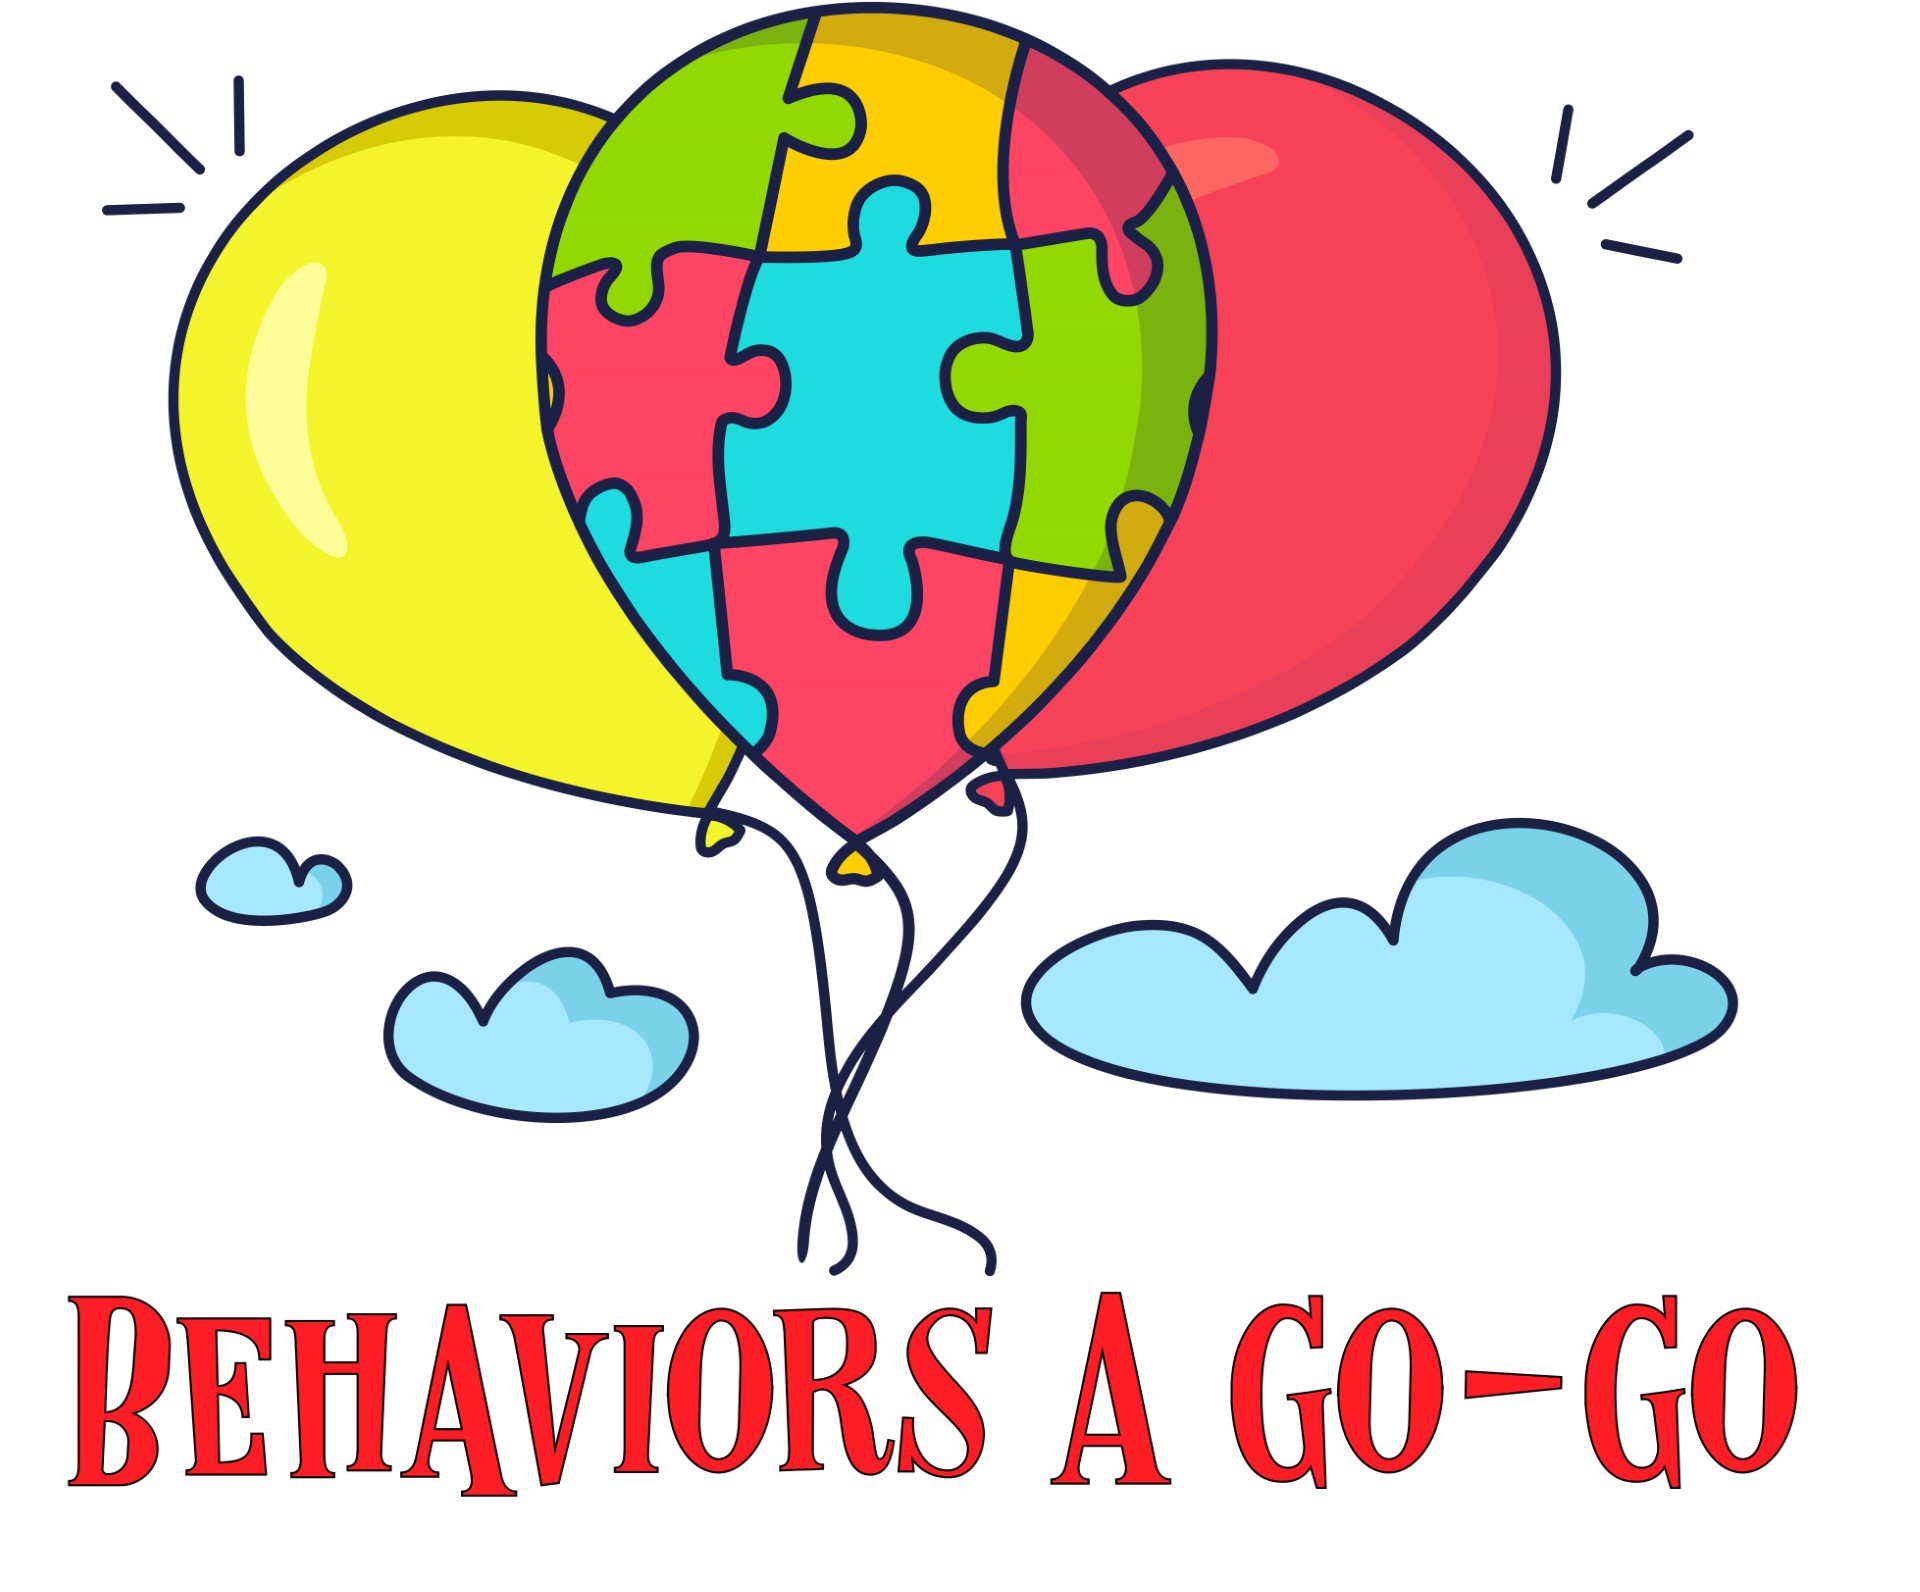 Behaviors a go go Logo